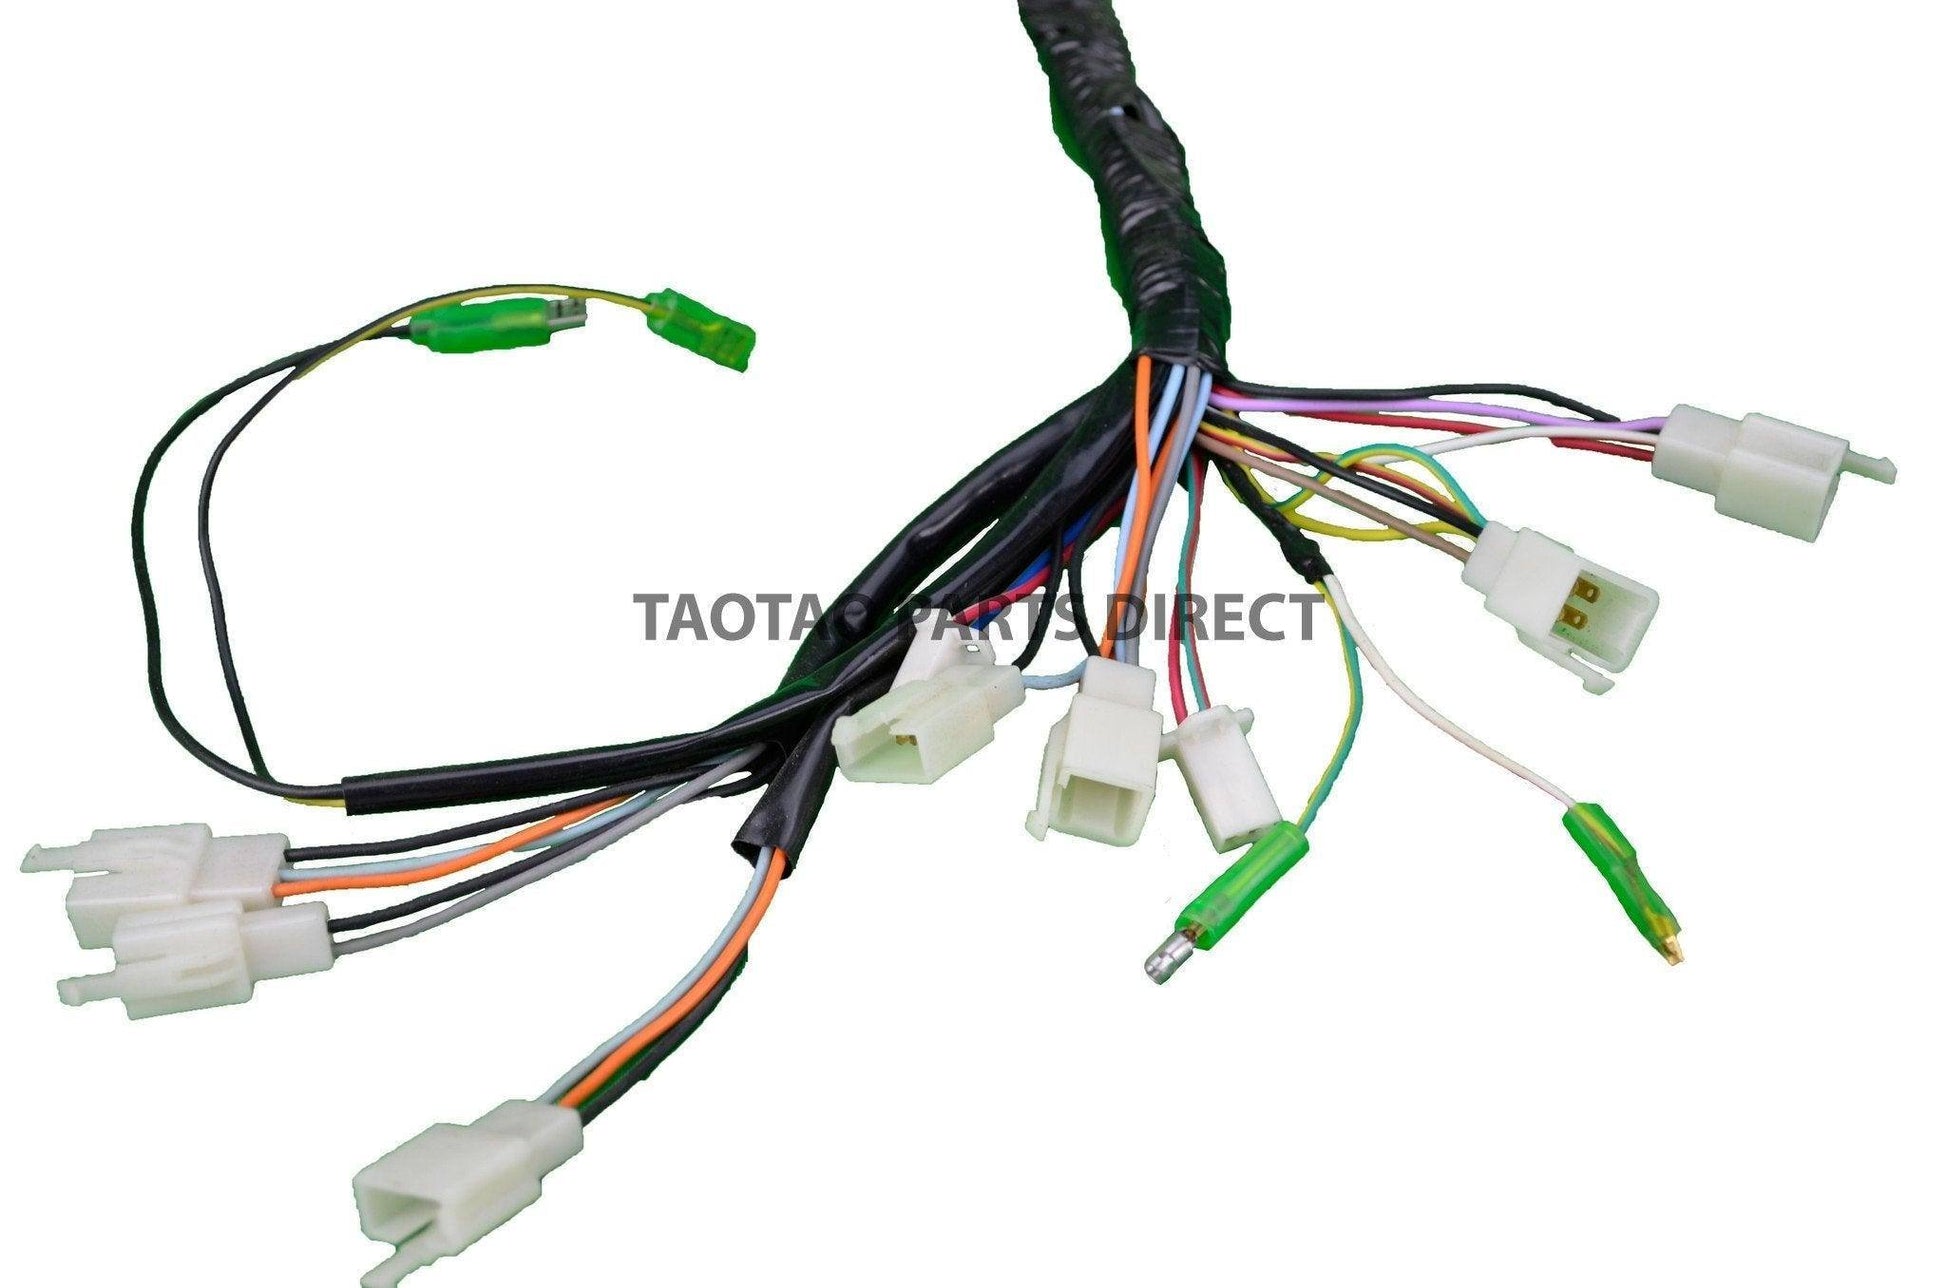 ATA135D Wire Harness #15 - TaoTao Parts Direct